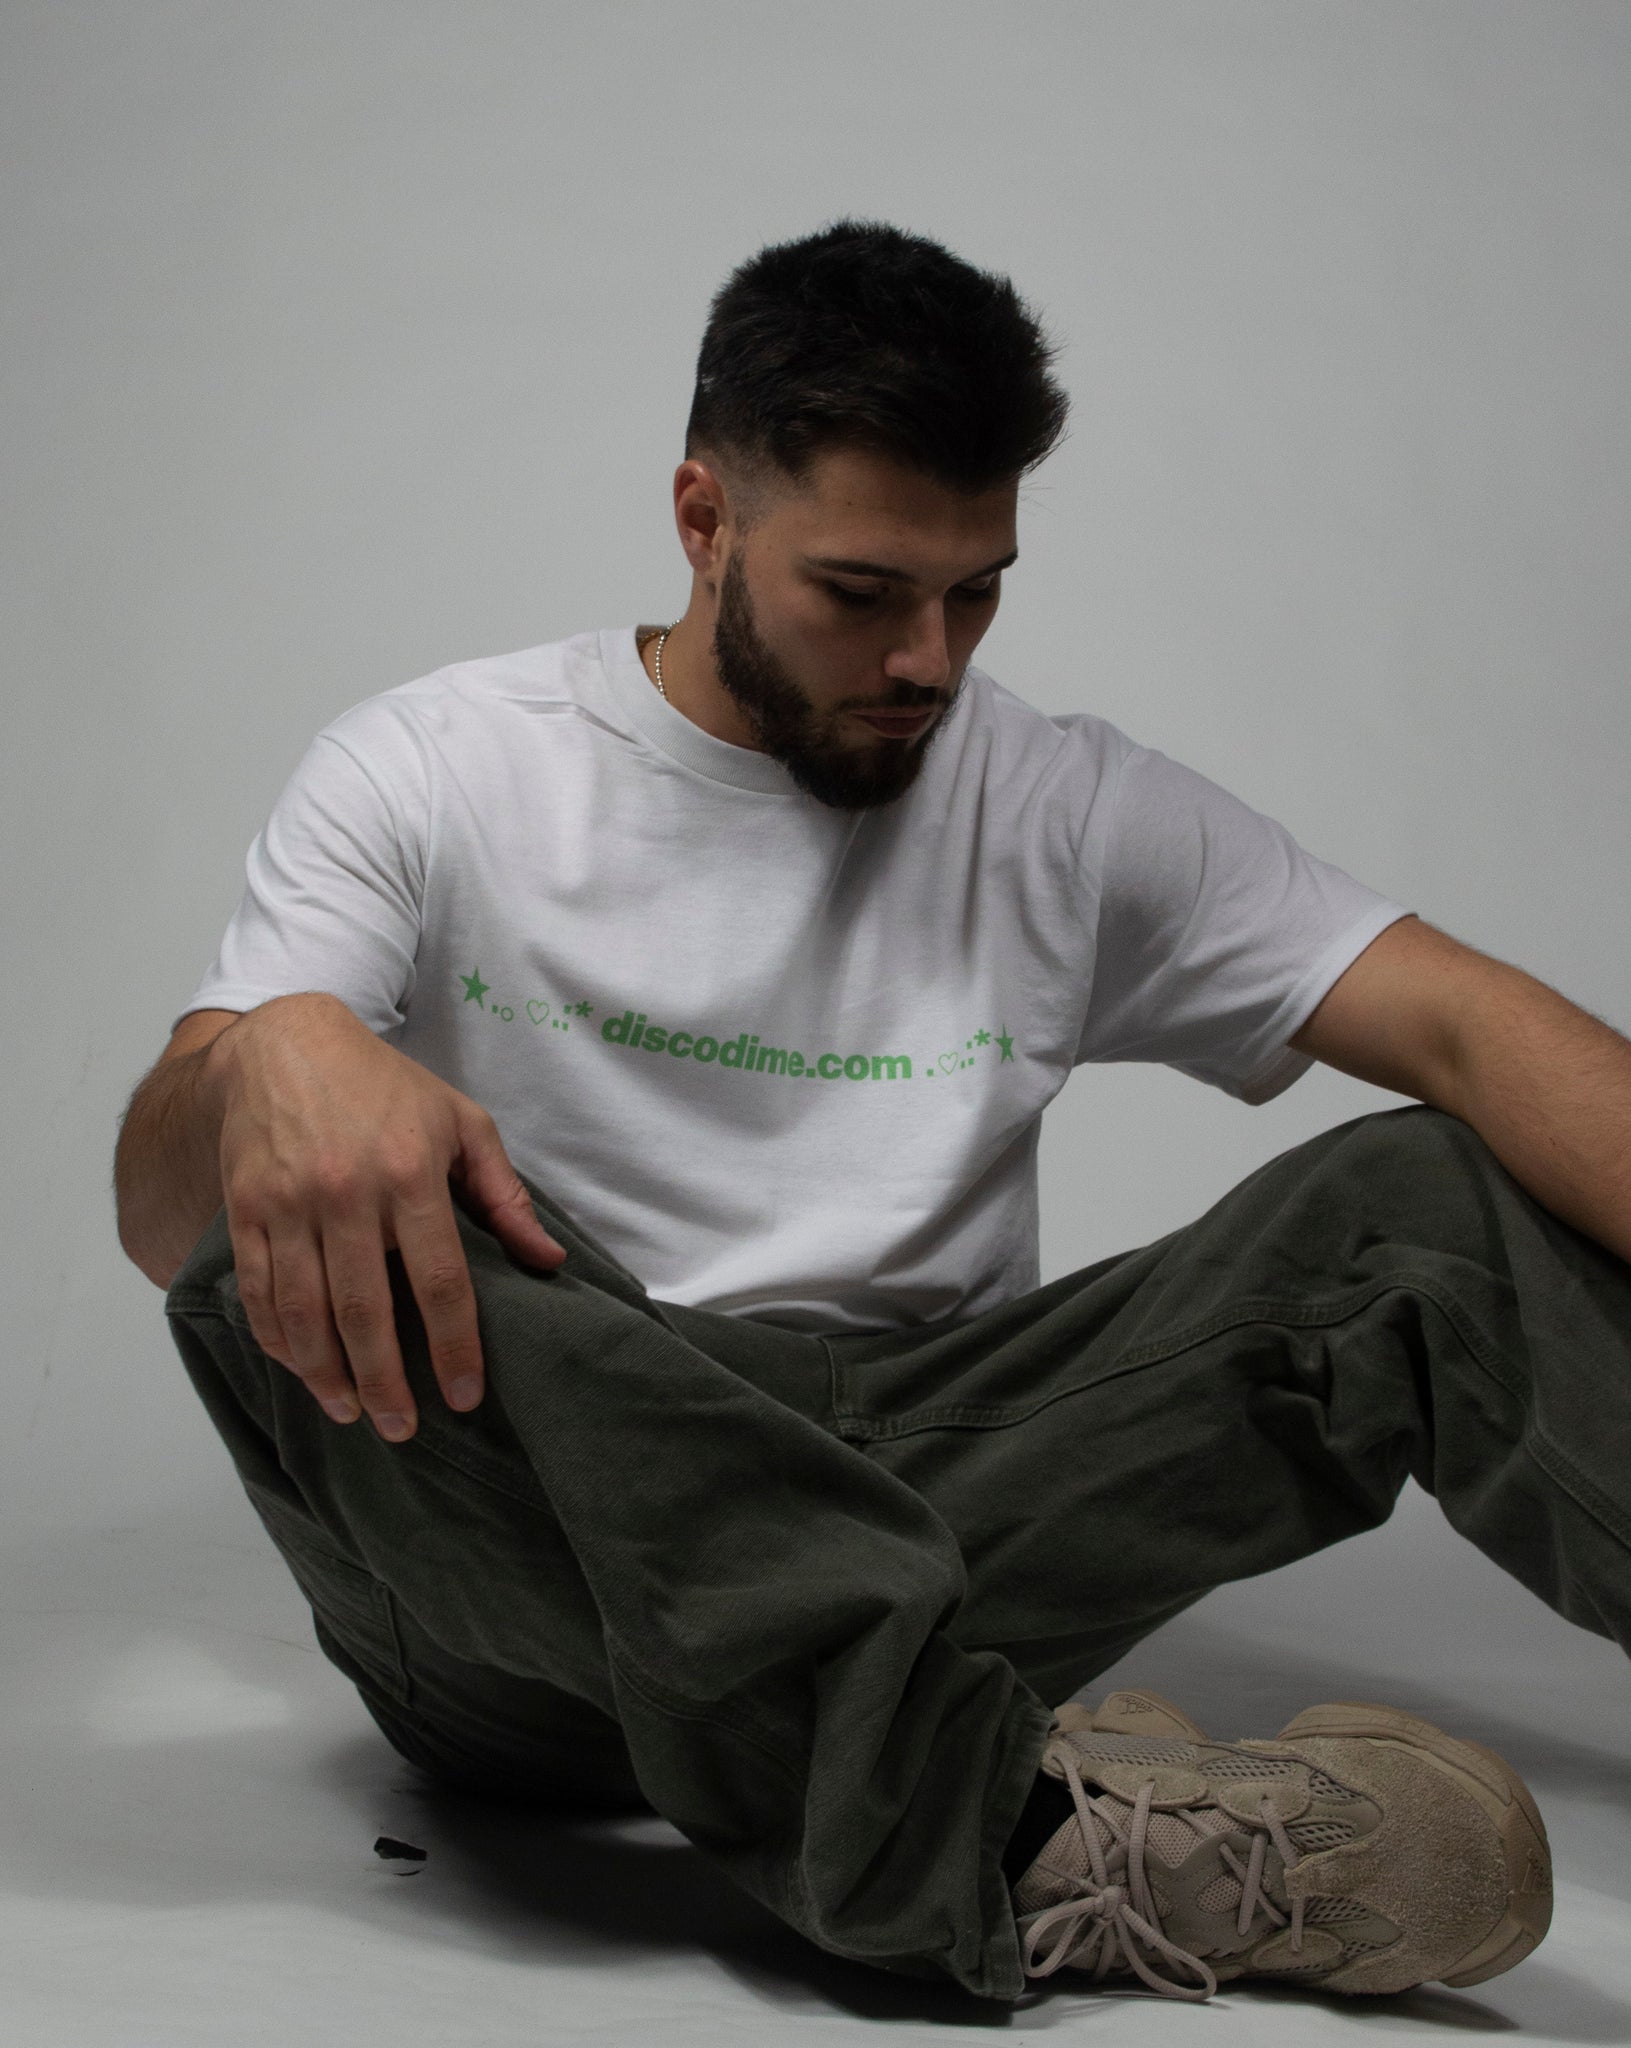 discodime.com Unisex T-Shirt (Green/White)